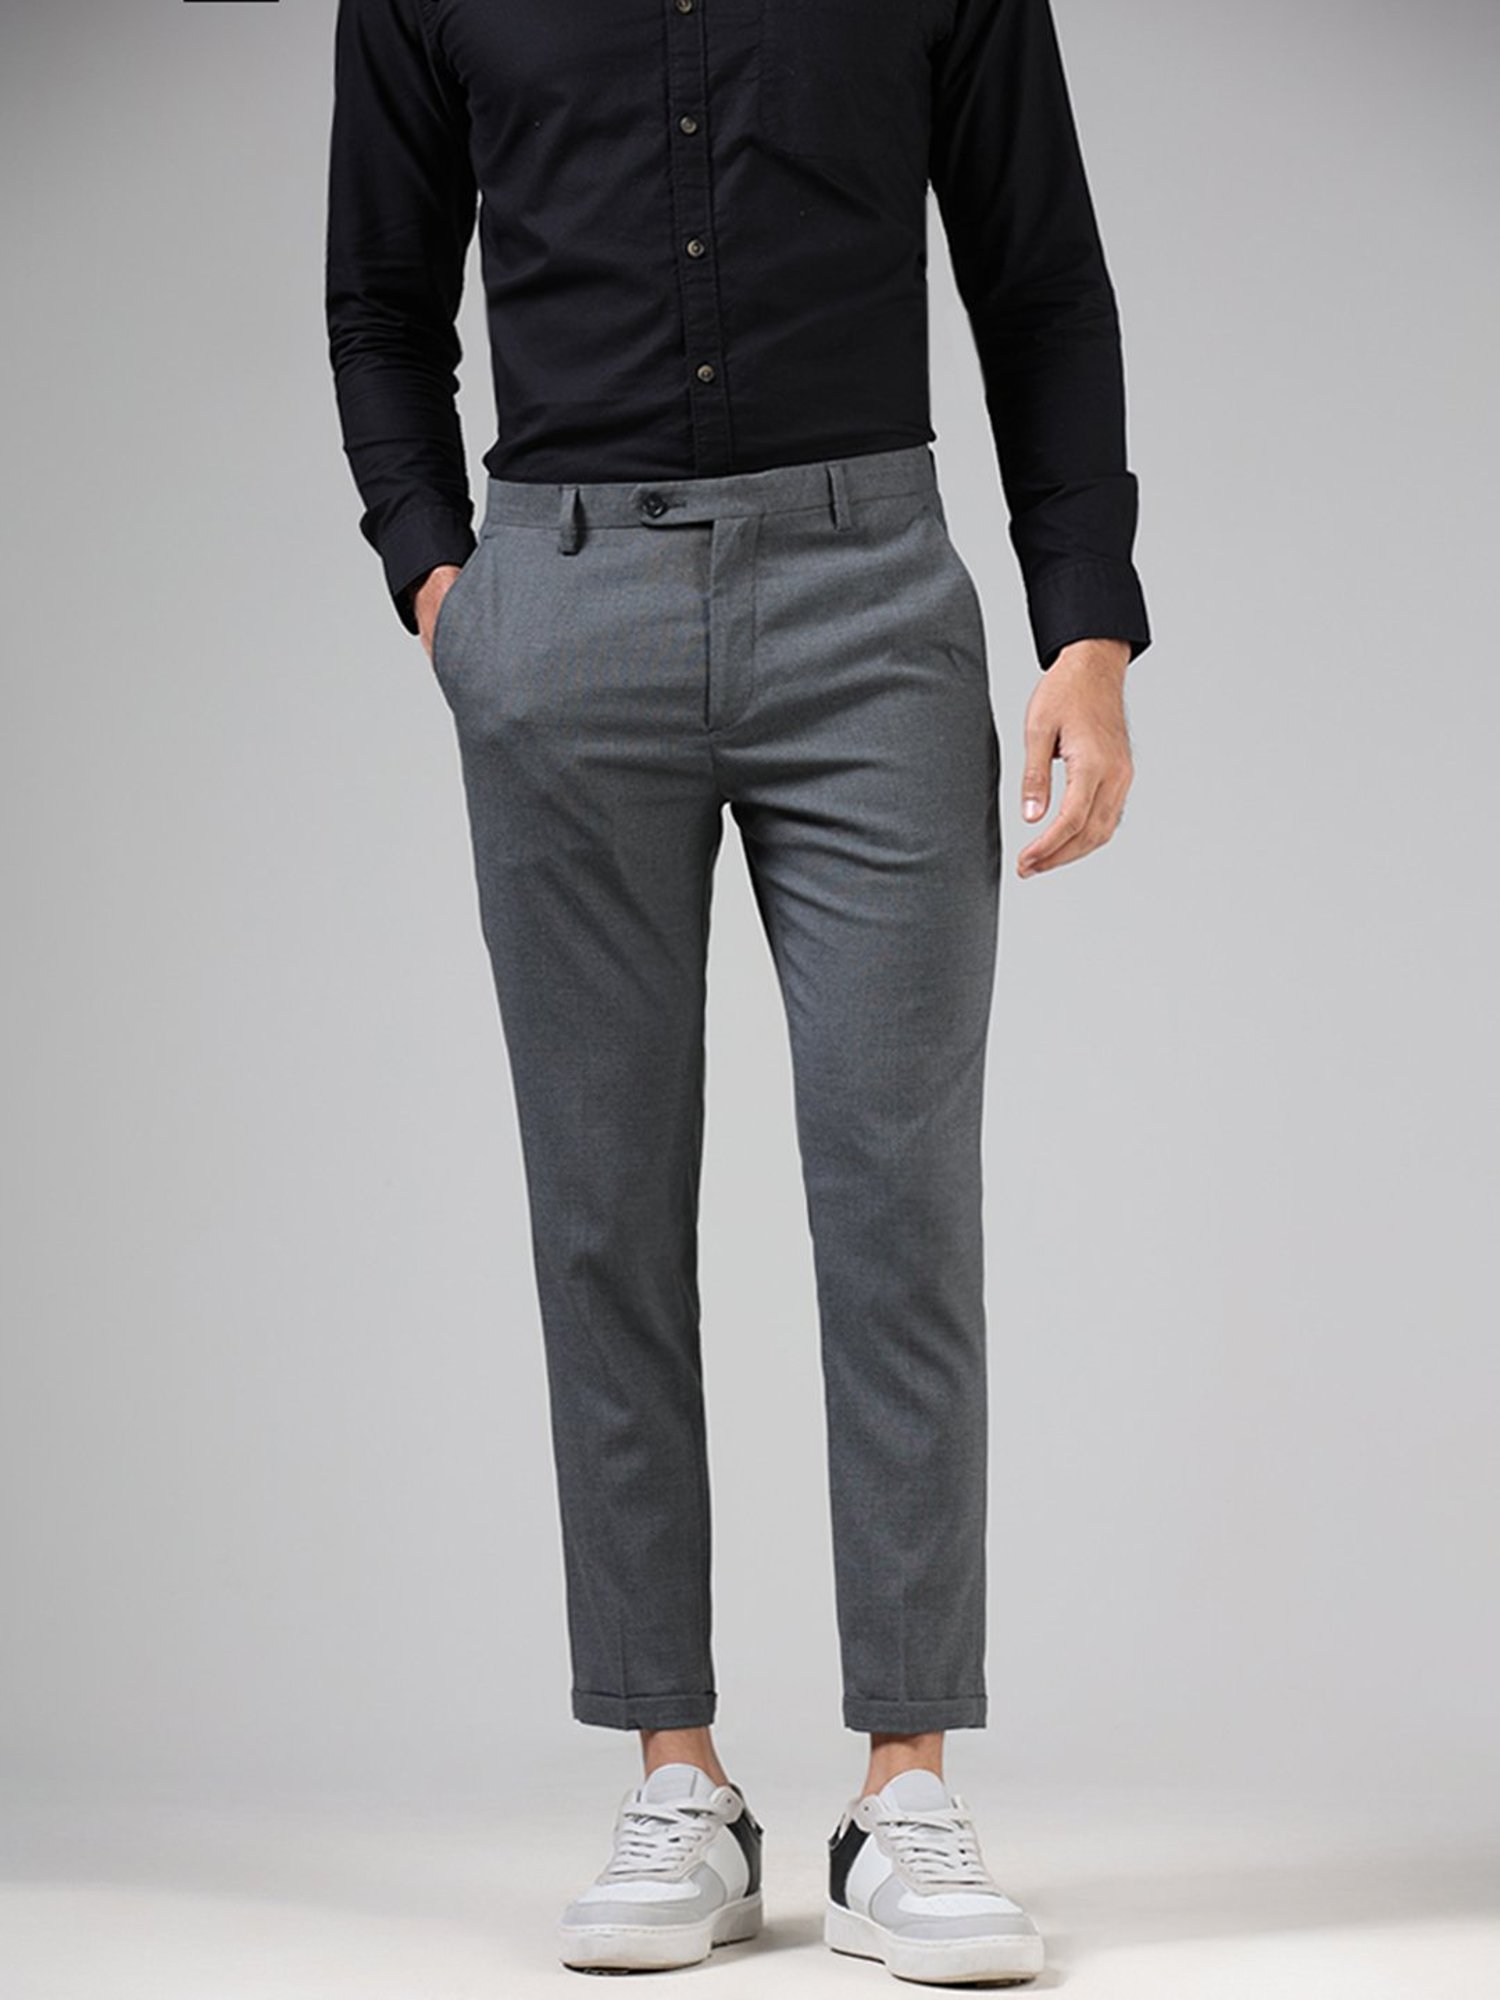 Men's Grey Trousers | River Island